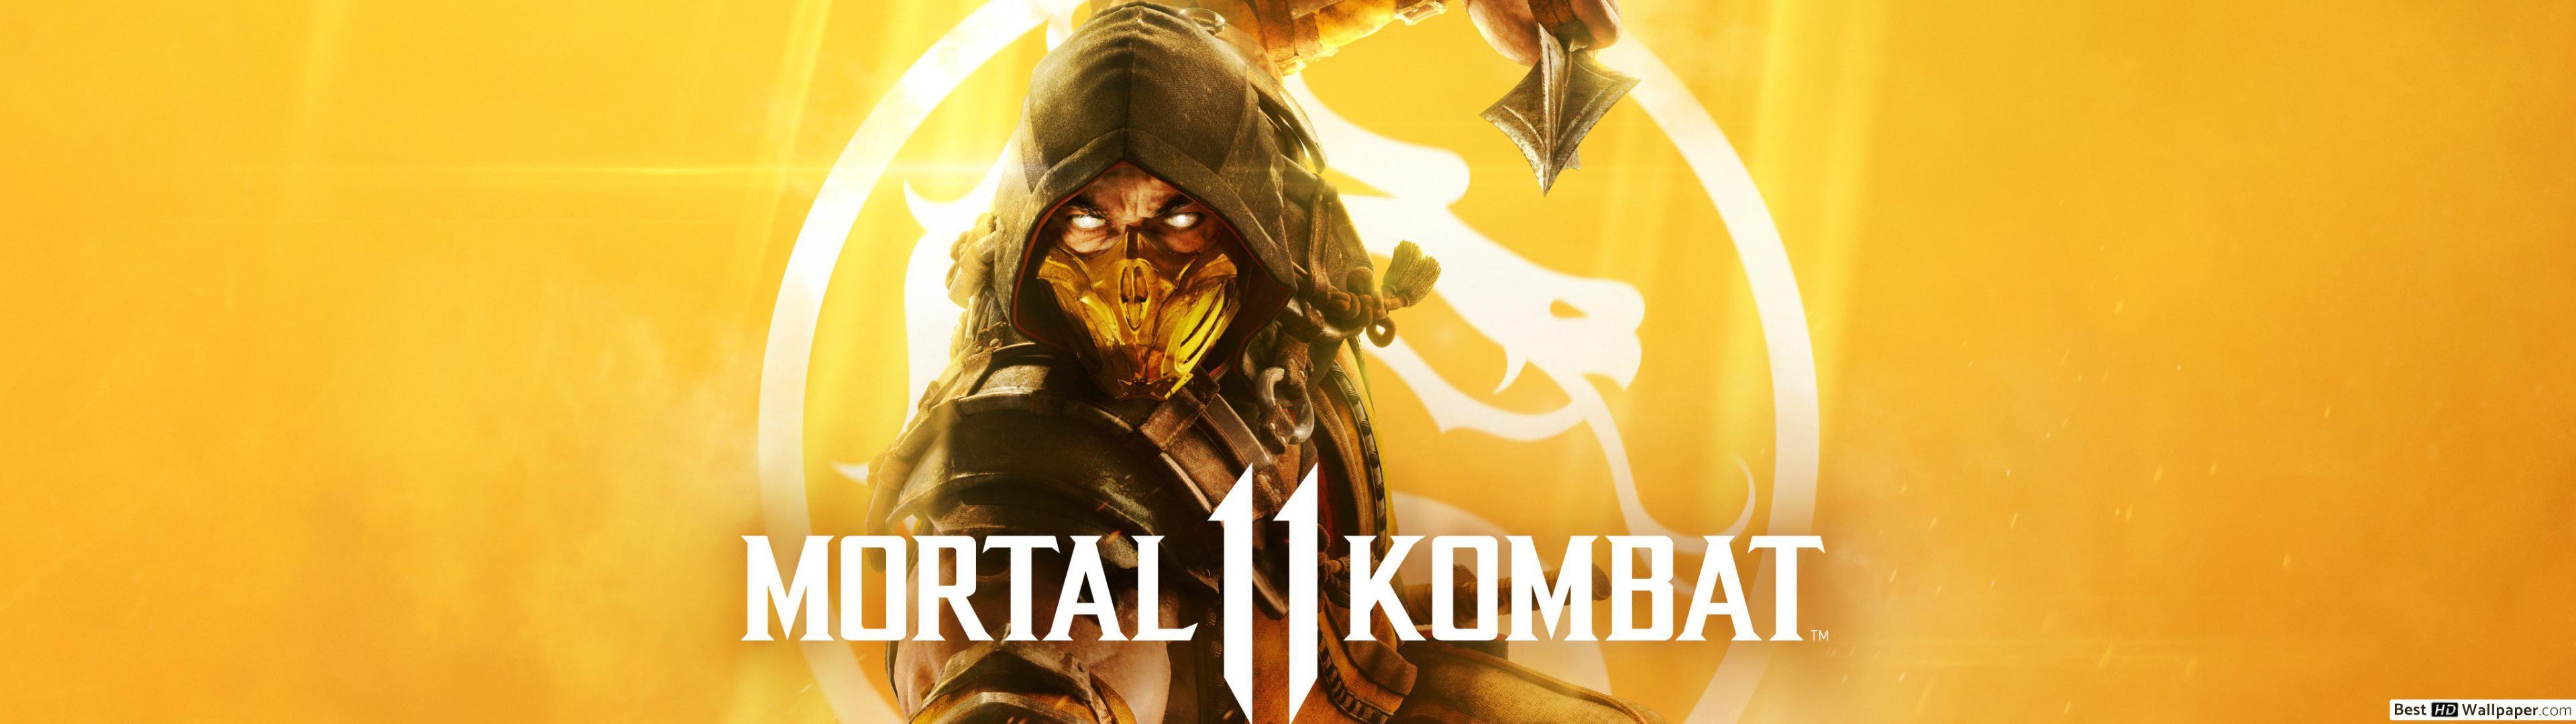 Mortal Kombat 11 HD wallpaper download